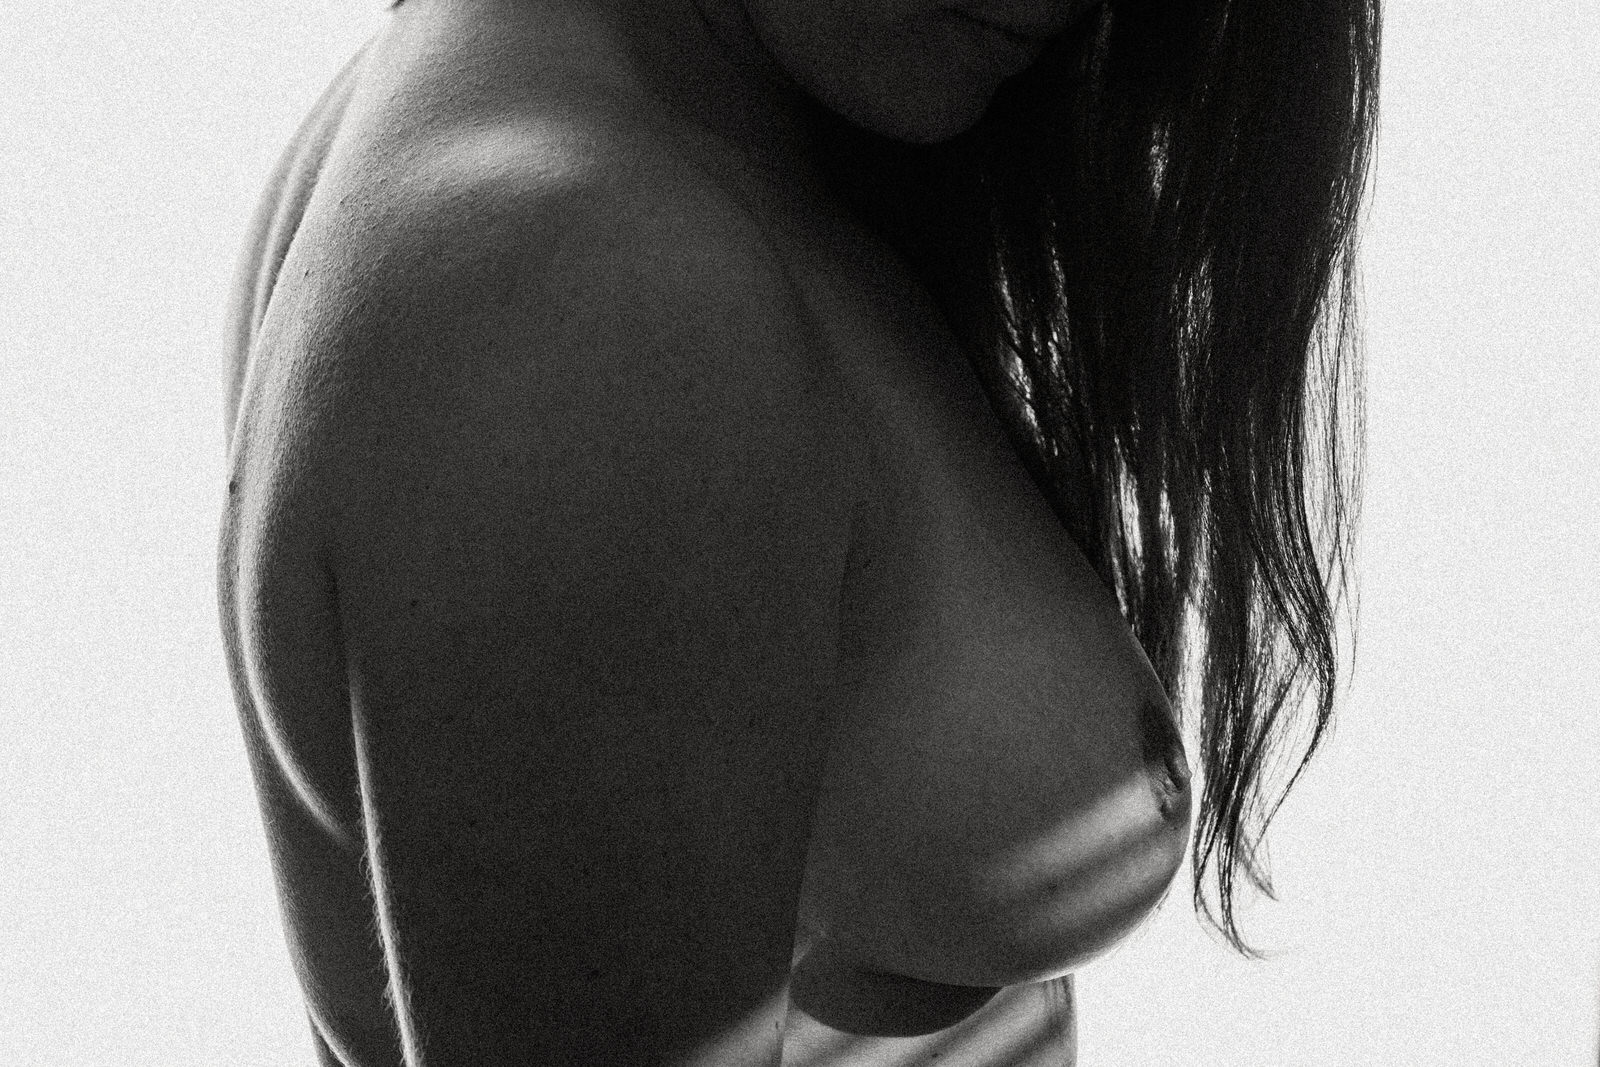 fine art nude image of woman's breast